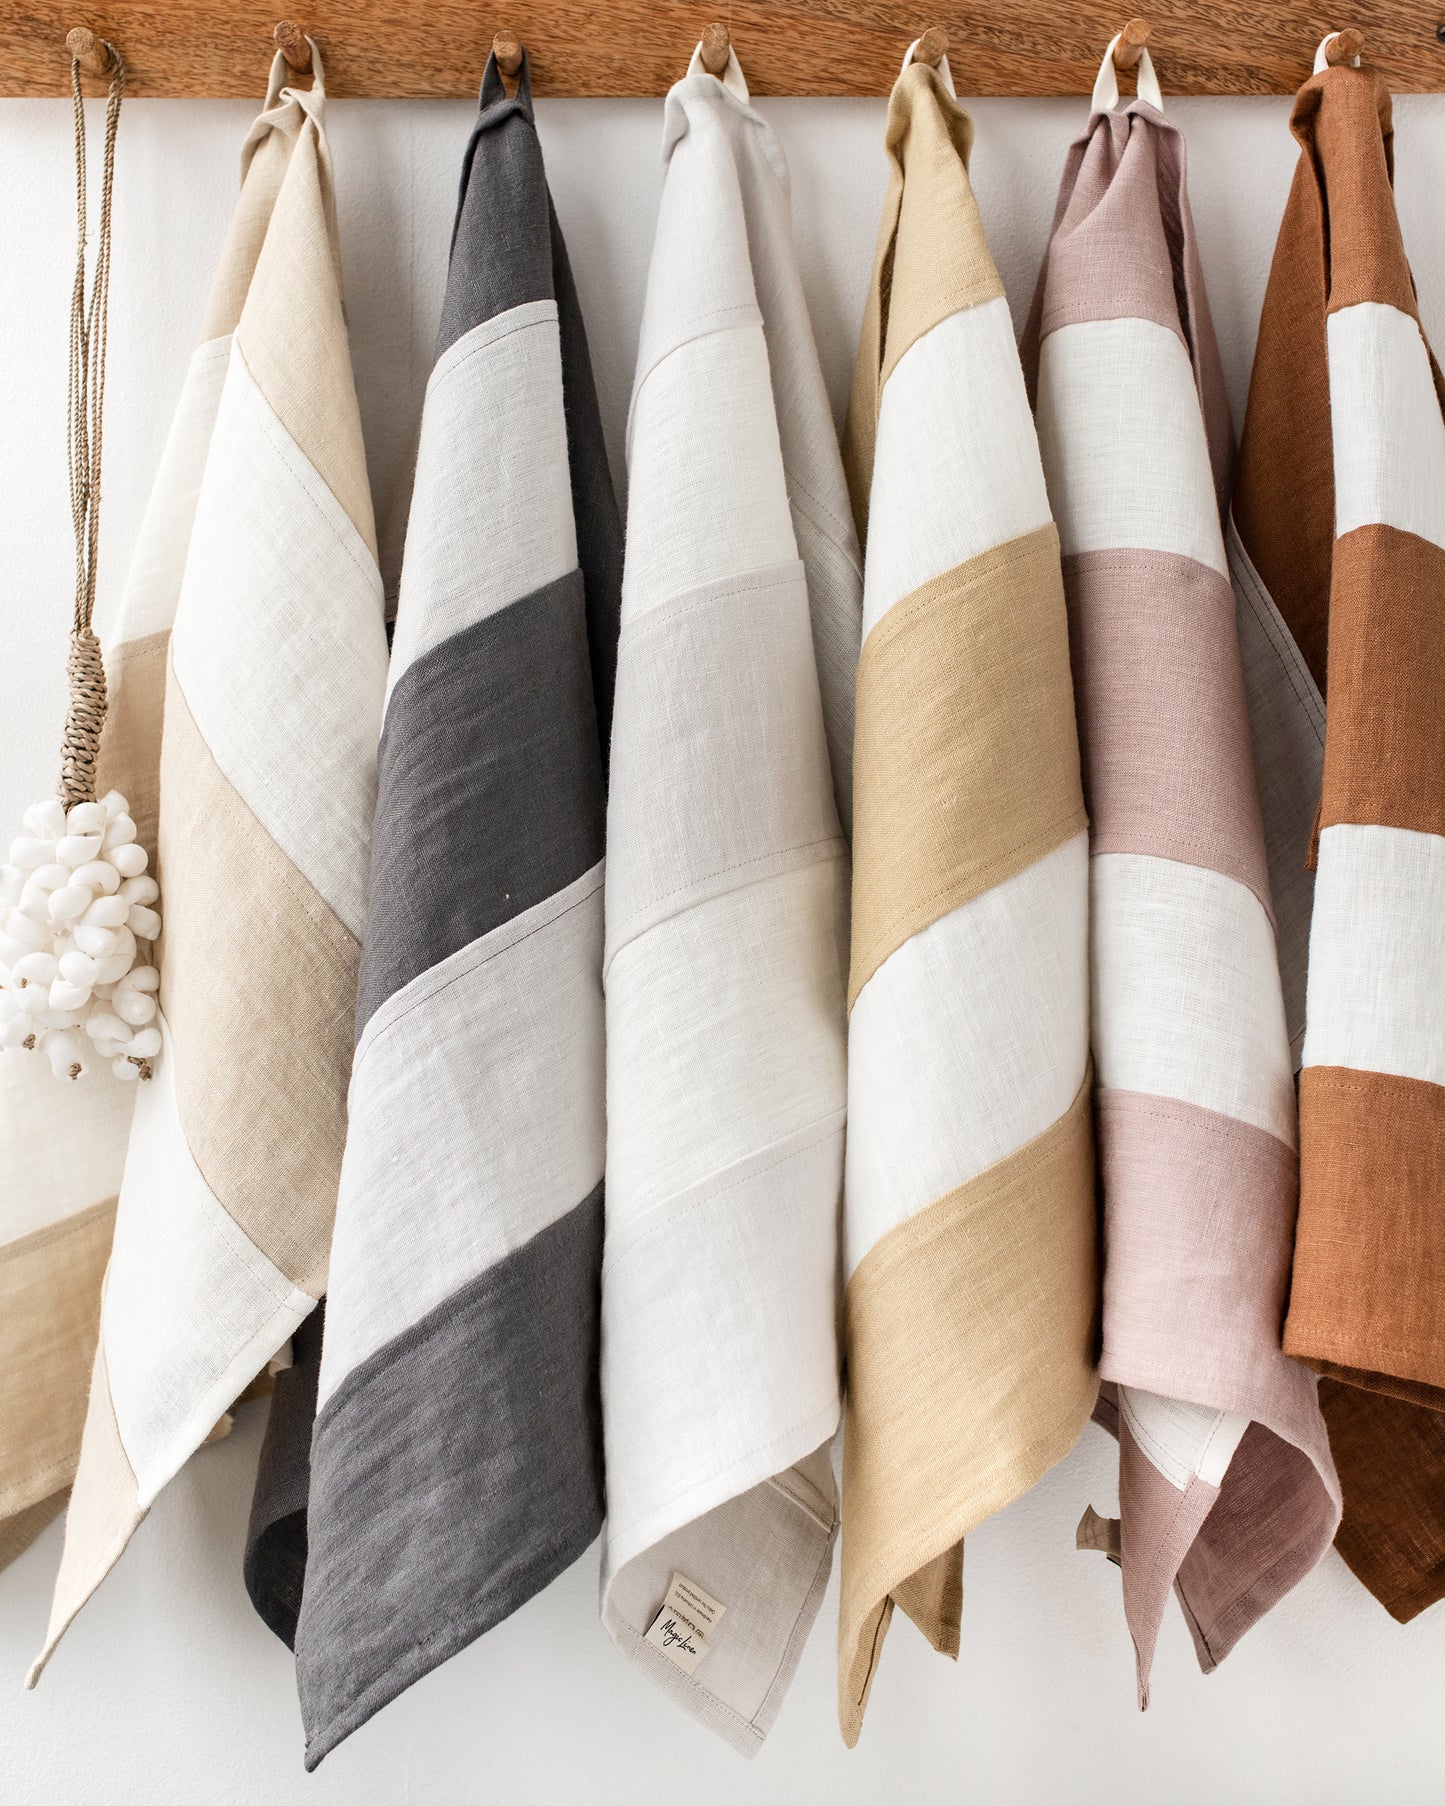 Zero-waste striped linen tea towel in Natural linen - MagicLinen